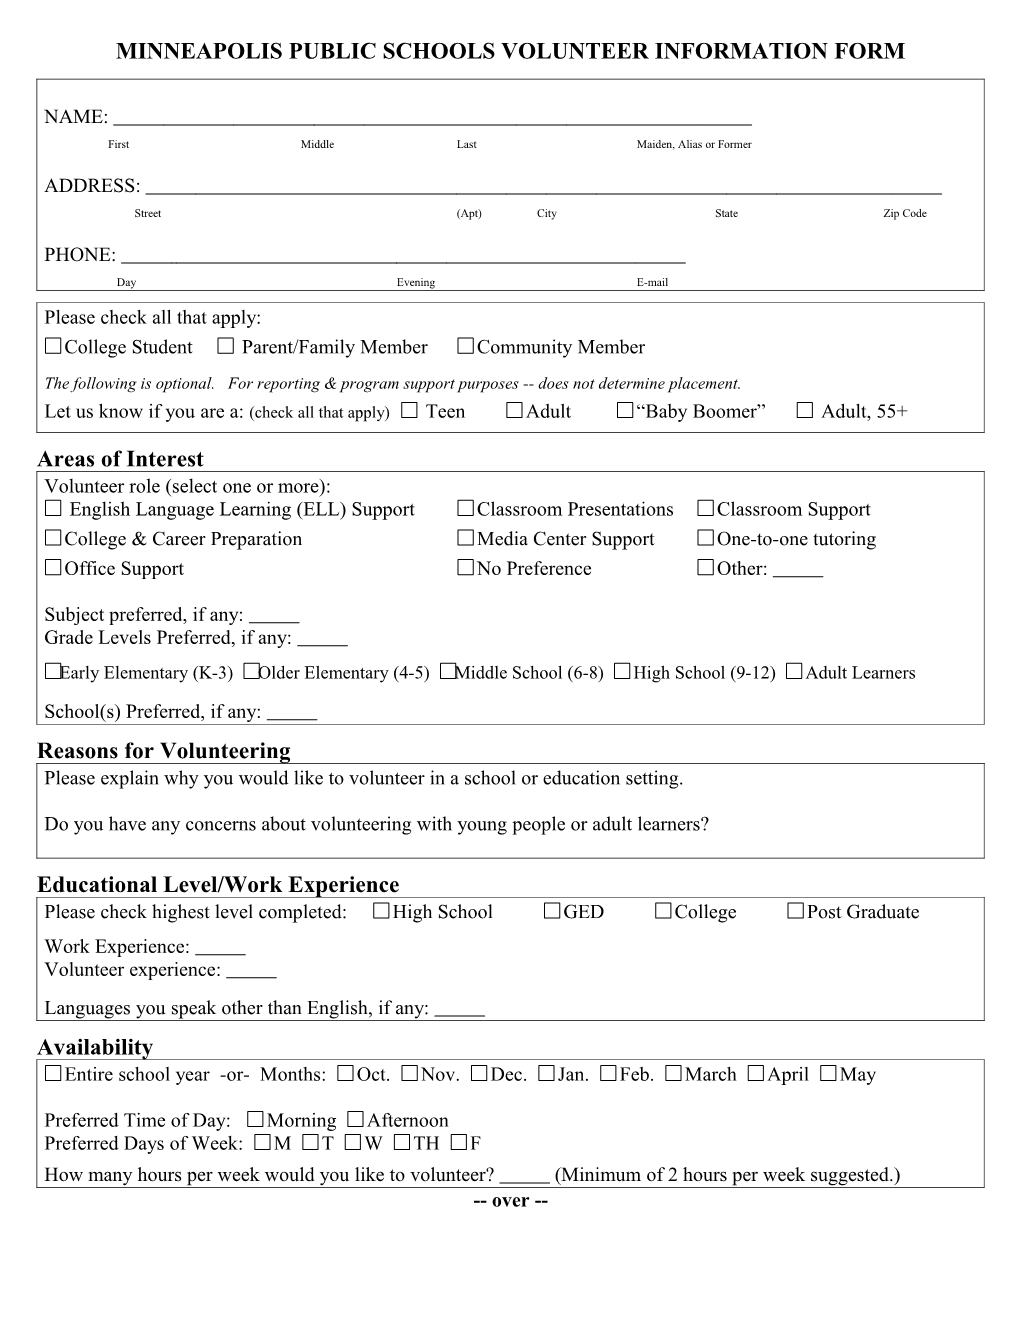 Minneapolis Public Schools Volunteer Information Form